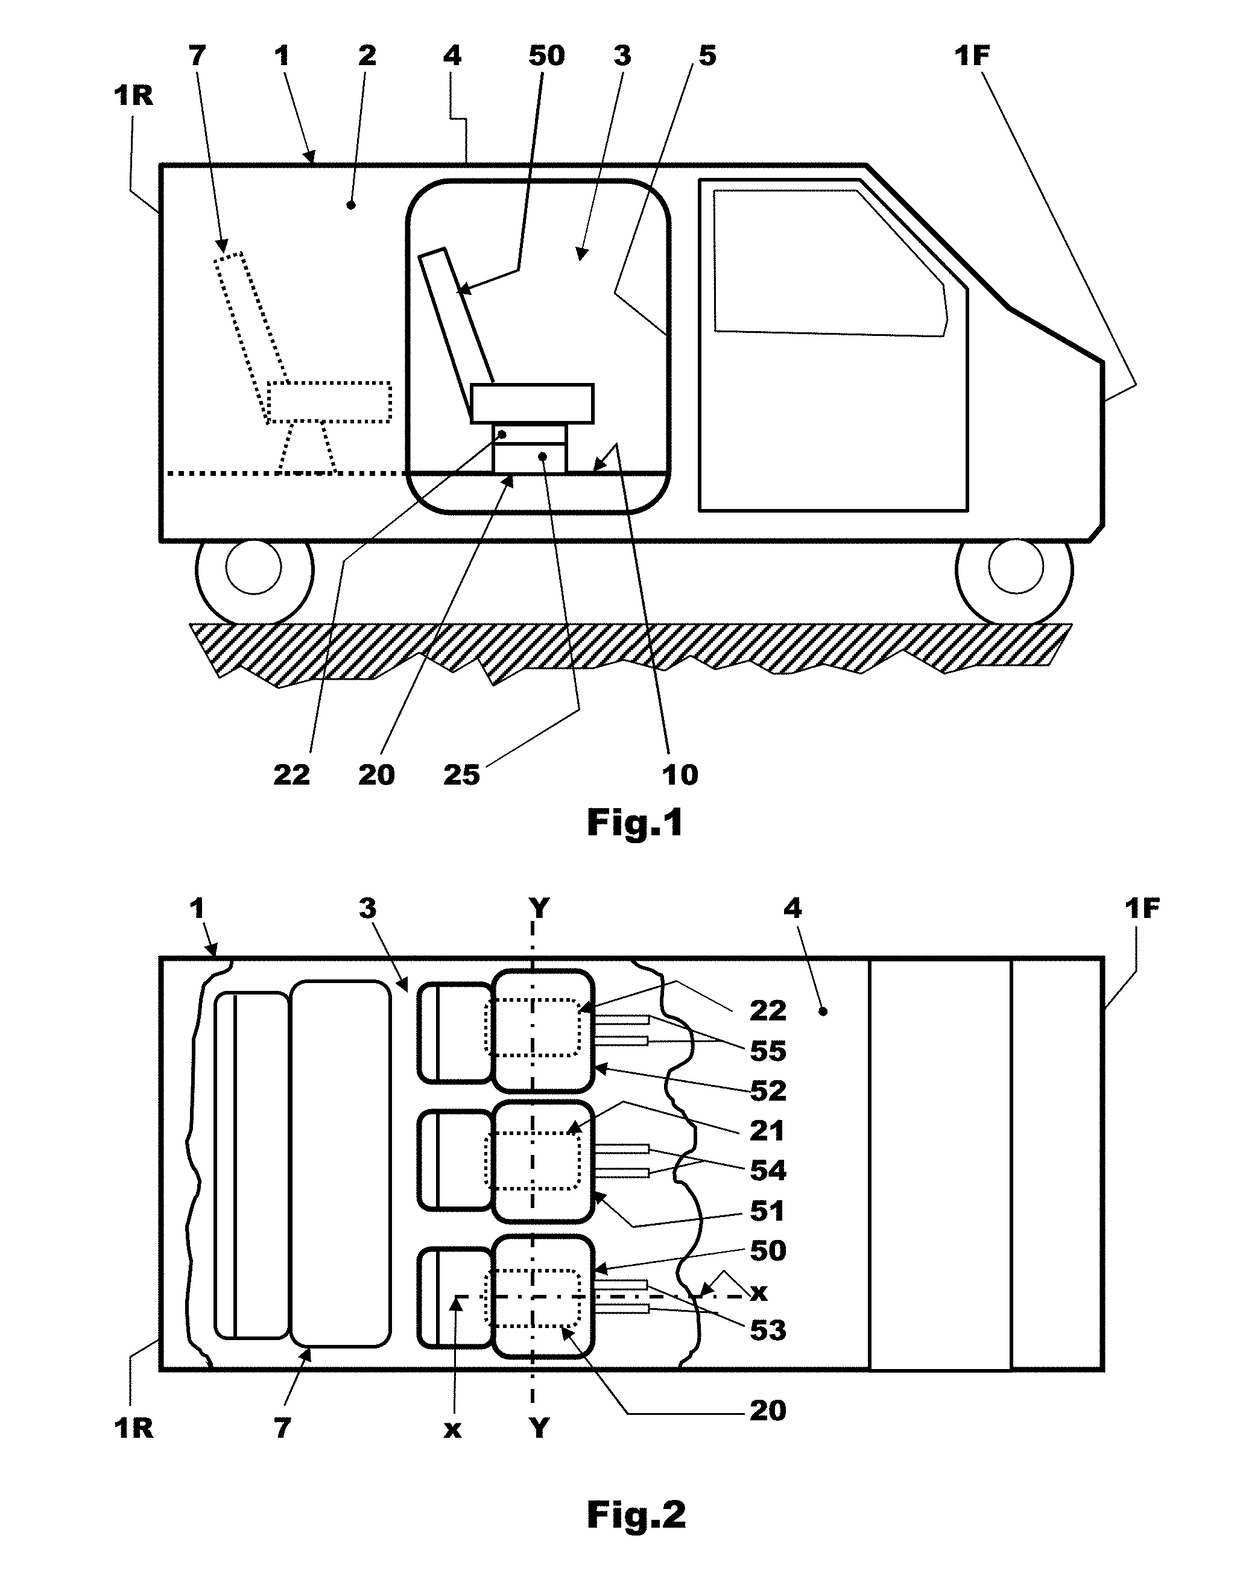 Motor vehicle having a multi-function mounting apparatus